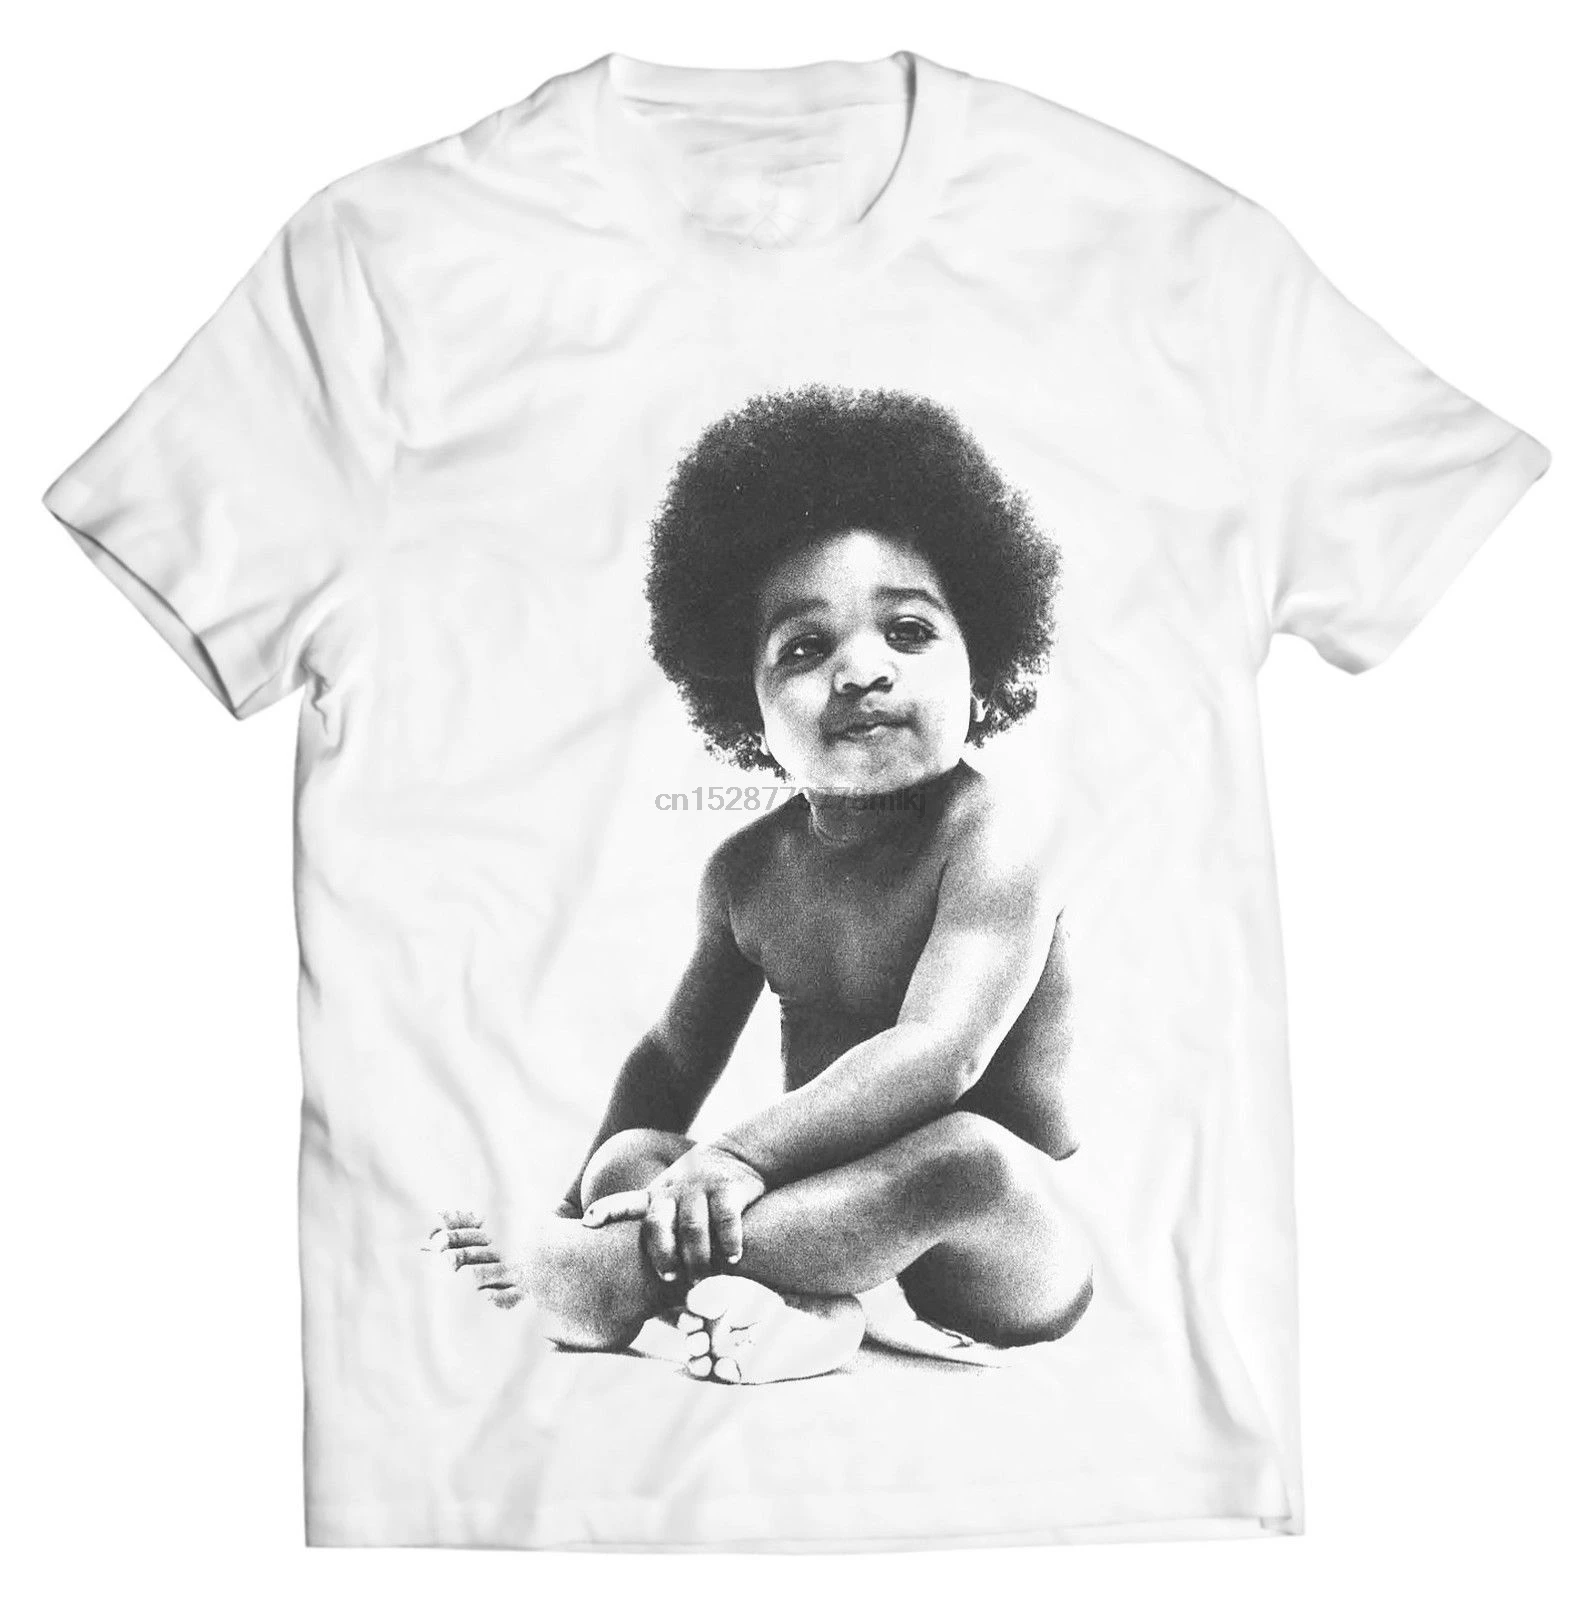 Ready to Die Baby Notorious B.I.G Biggie/уличная одежда в стиле хип-хоп футболка с графикой новые